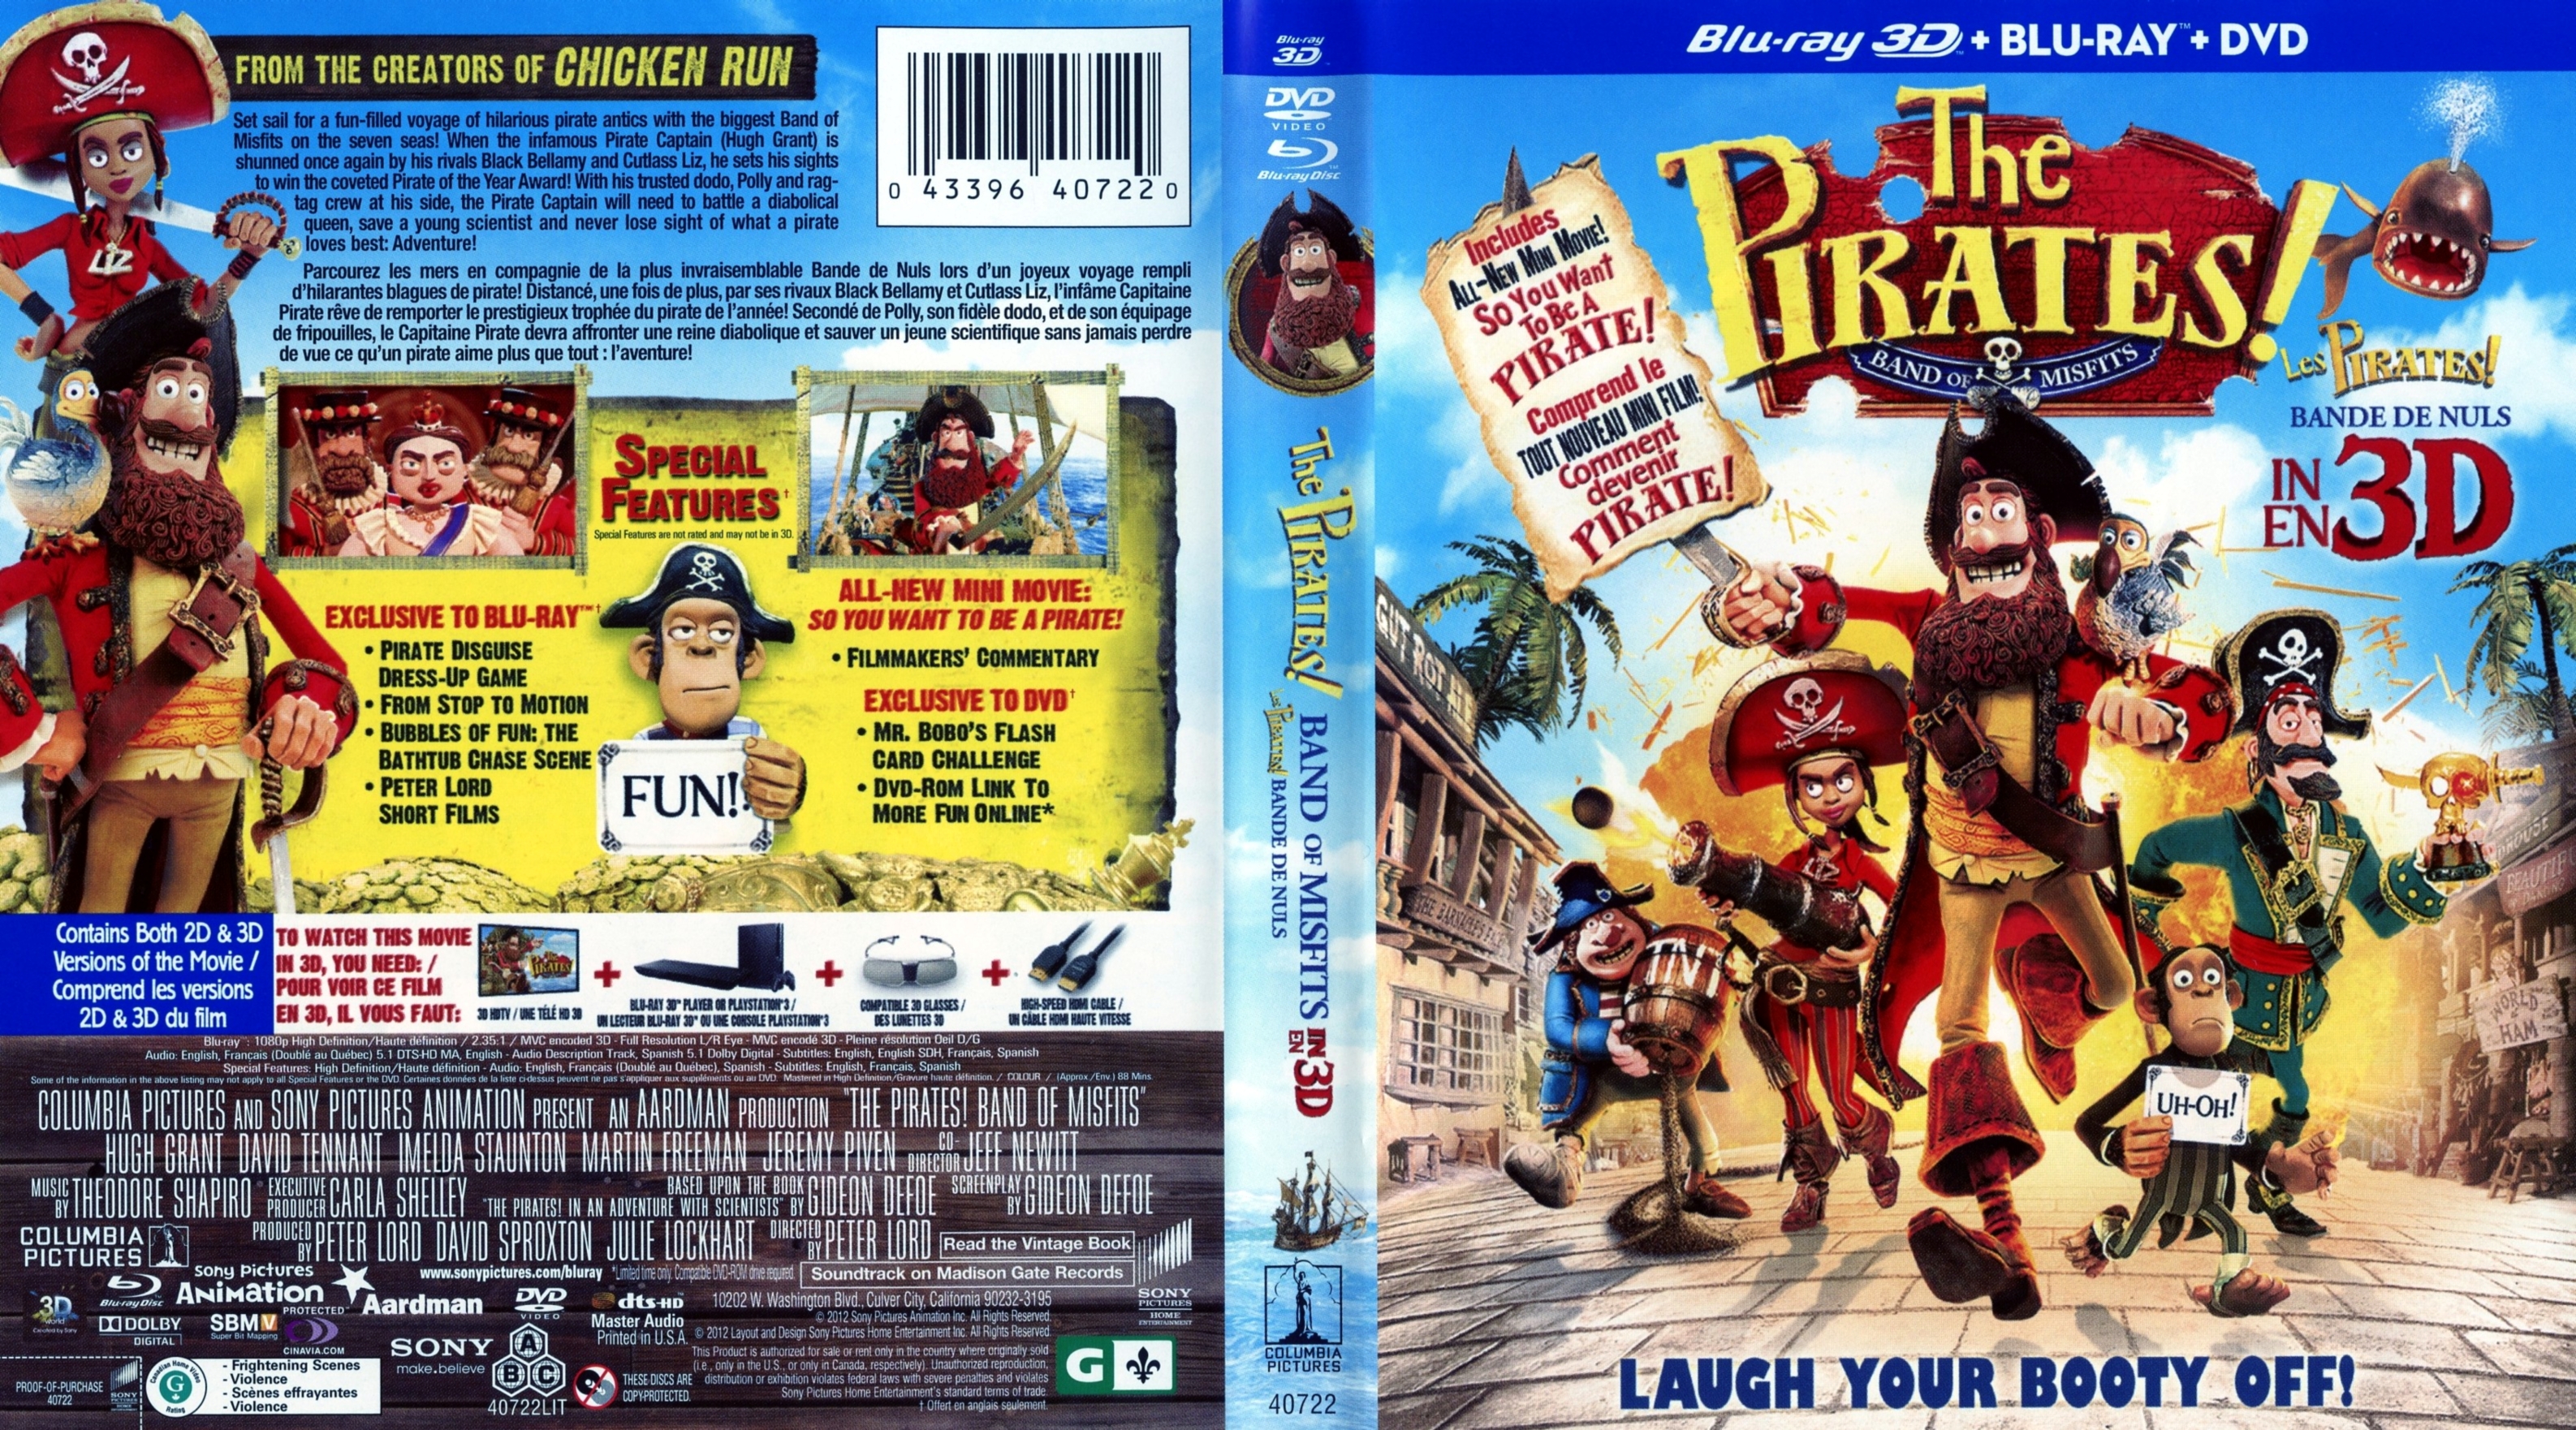 Jaquette DVD Les Pirates bande de nuls (Canadienne) (BLU-RAY)